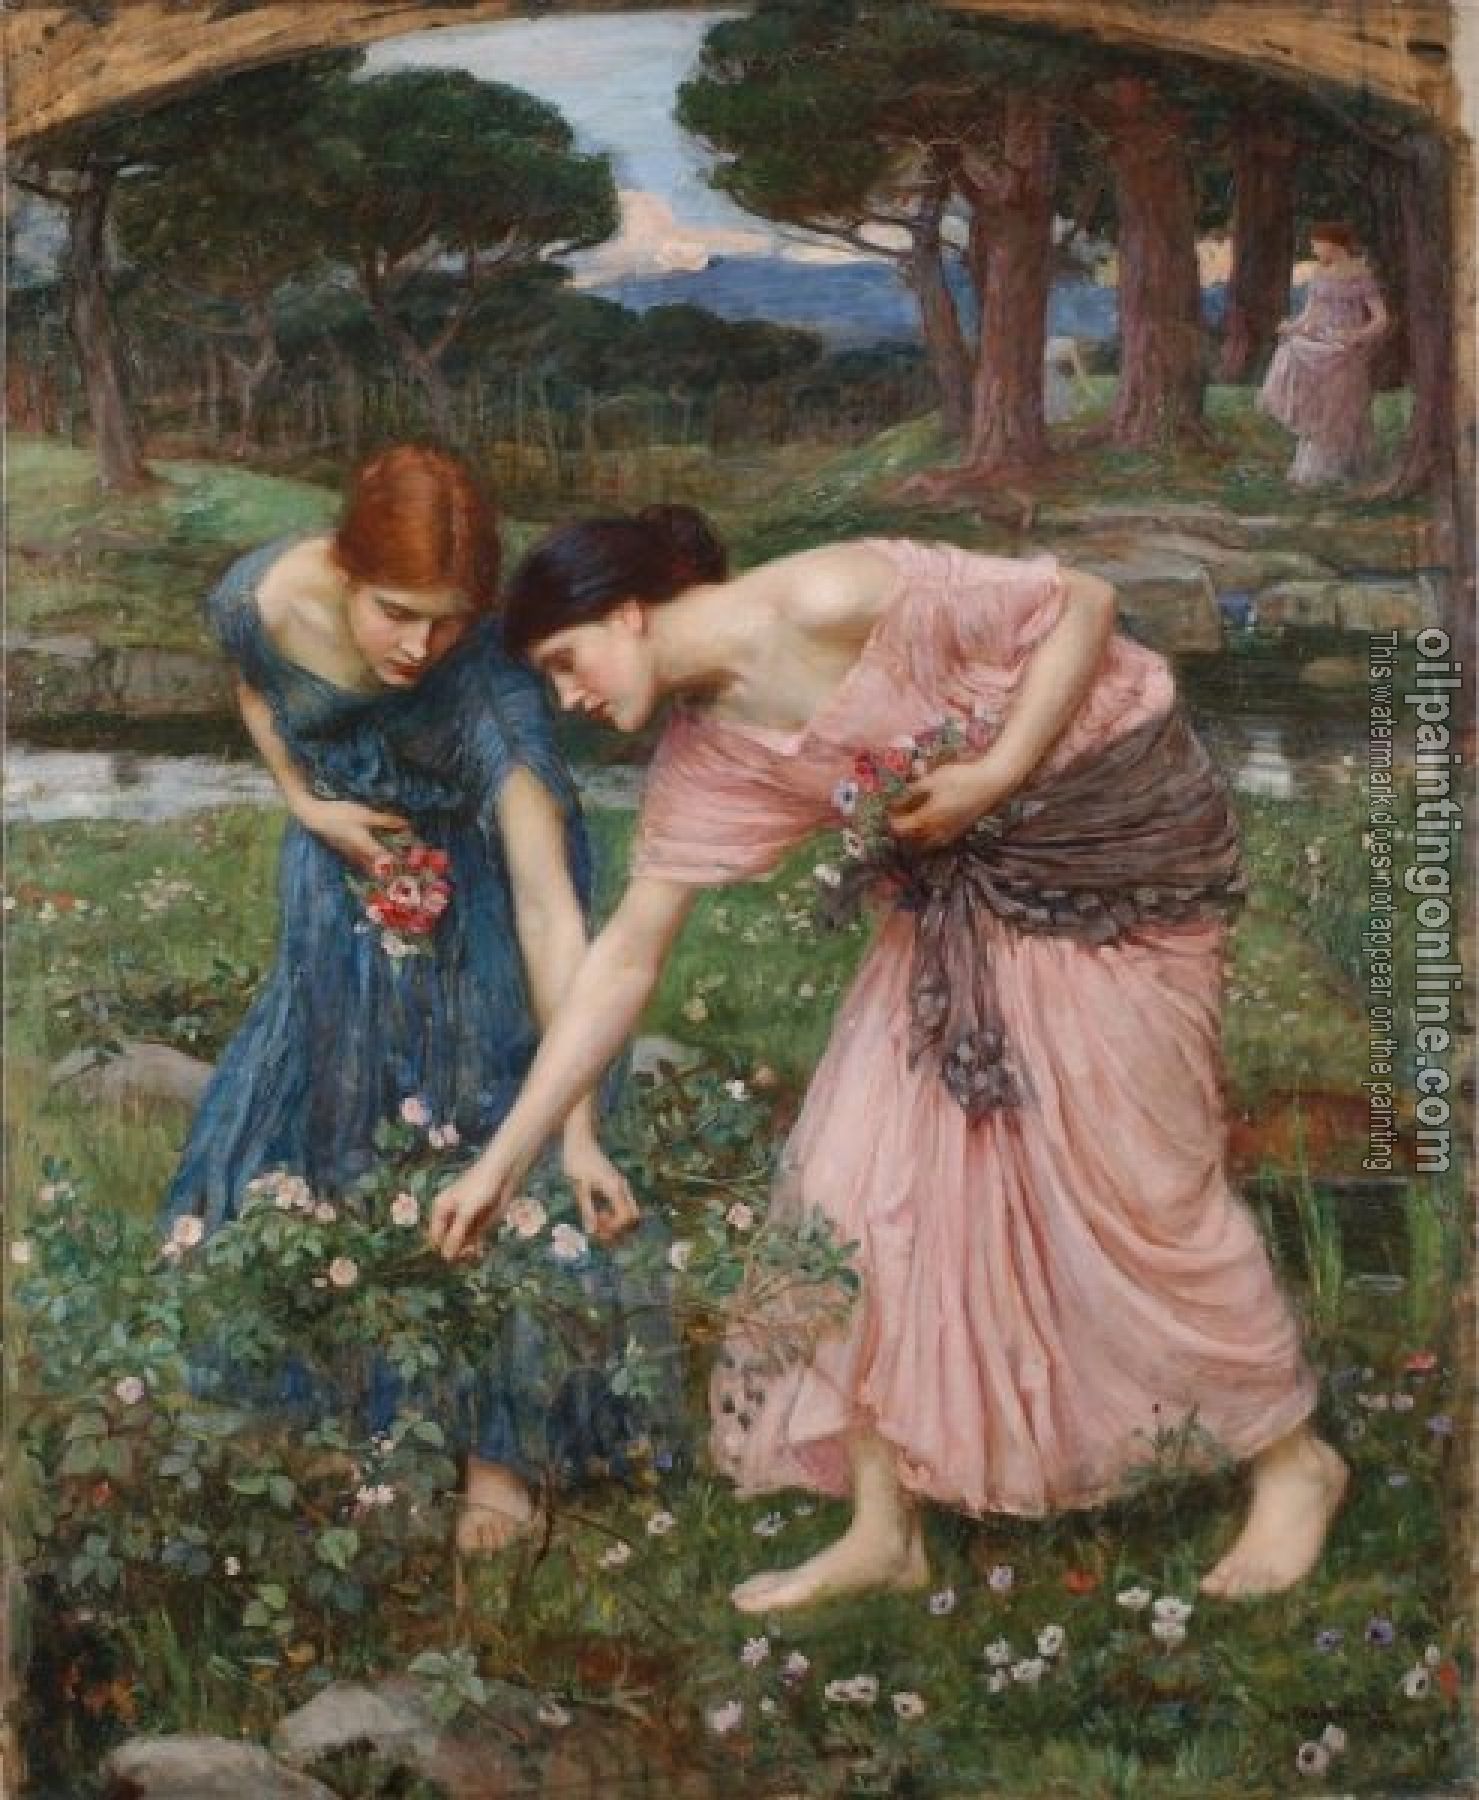 Waterhouse, John William - Gather ye rosebuds while ye may